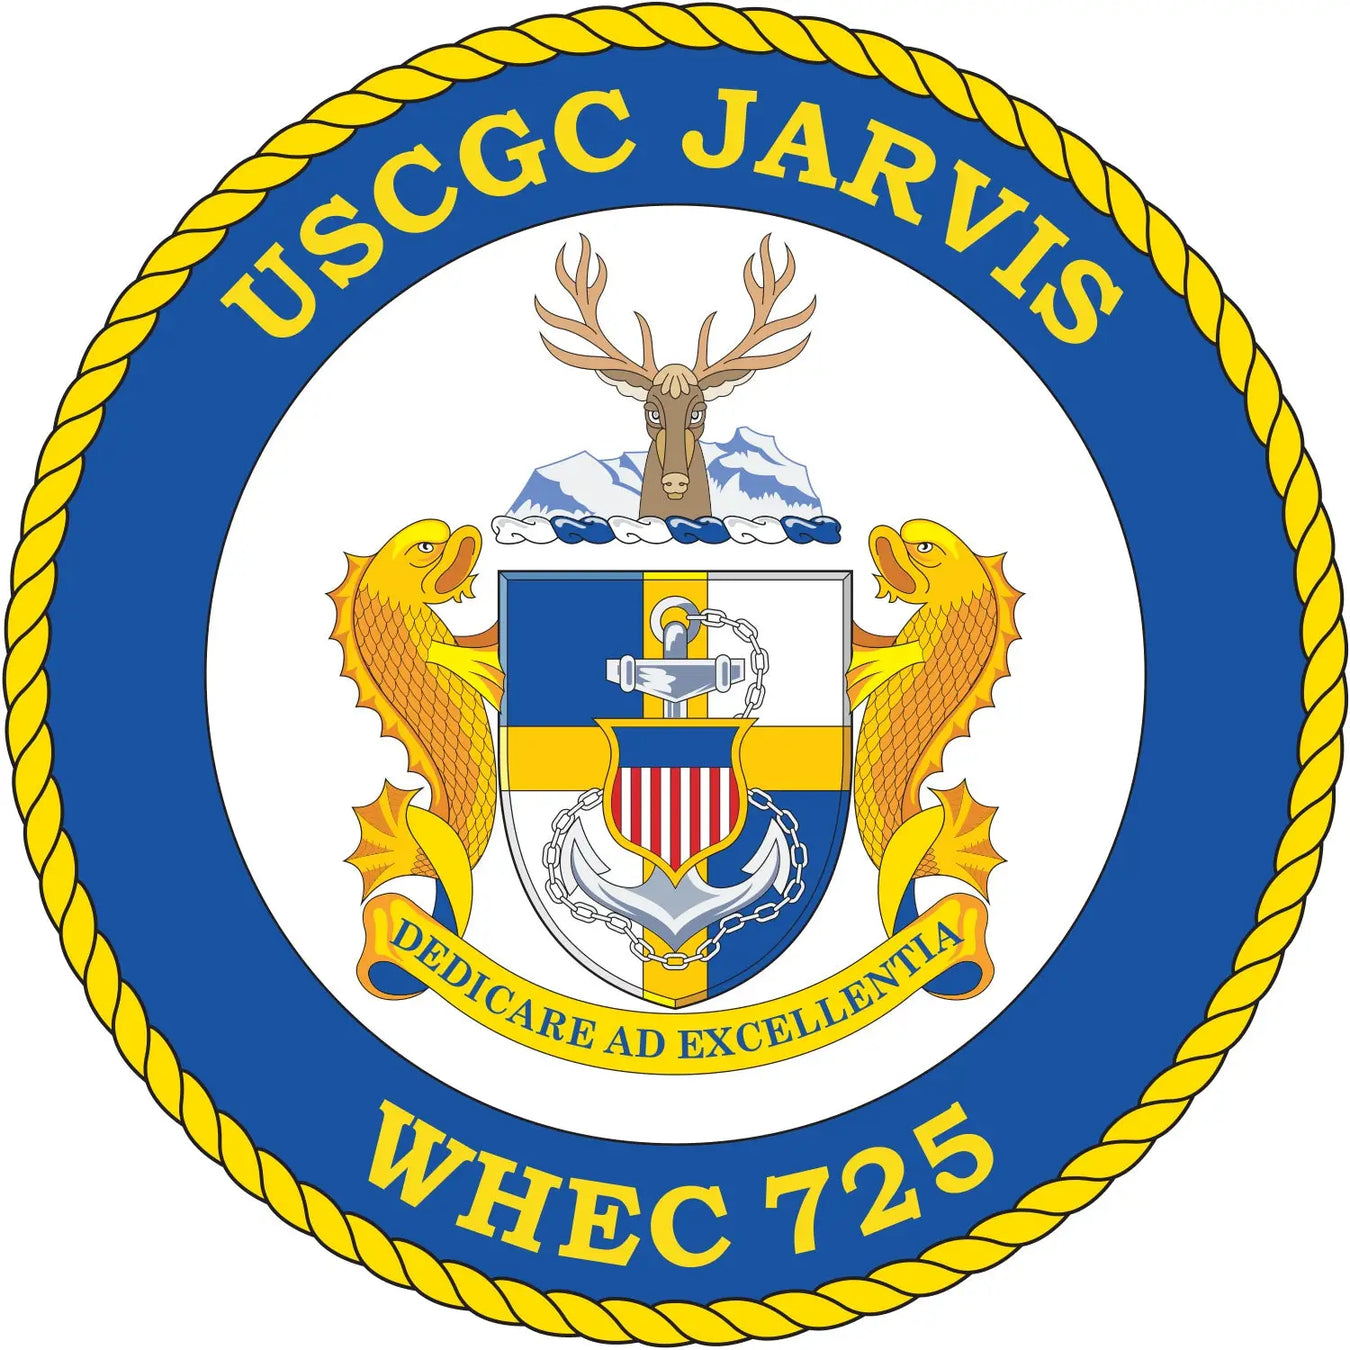 USCGC Jarvis (WHEC-725)